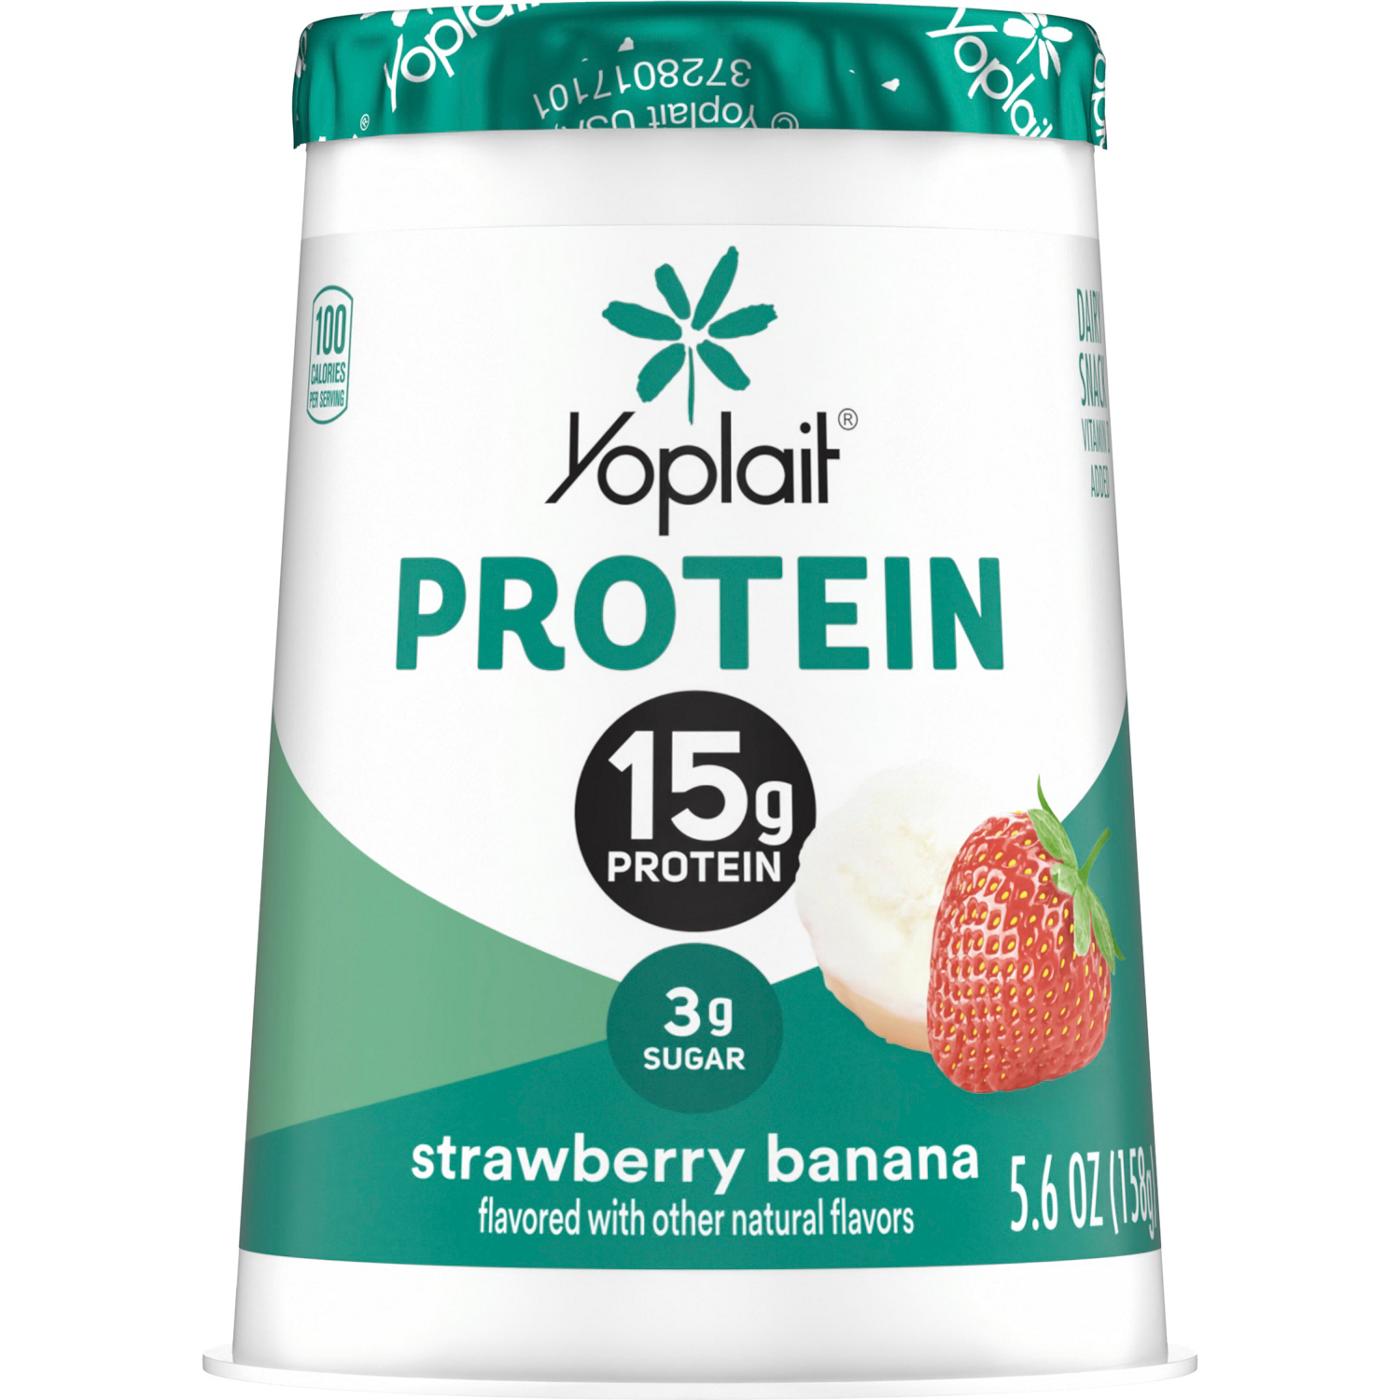 Yoplait 15g Protein Strawberry Banana Yogurt; image 1 of 4